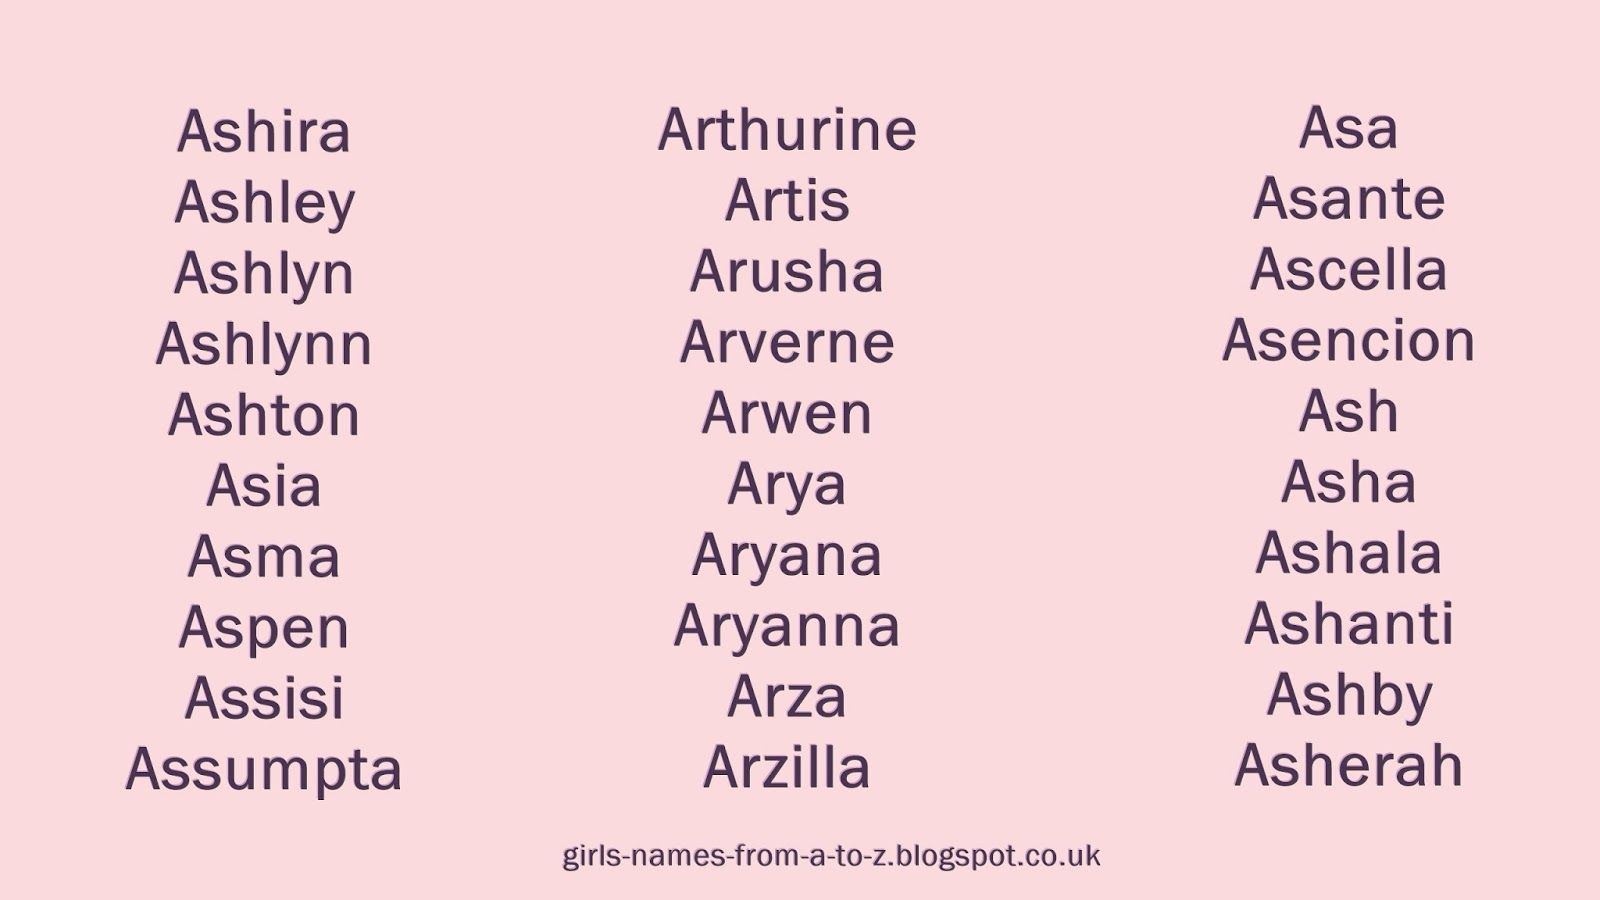 Asian girls names asa